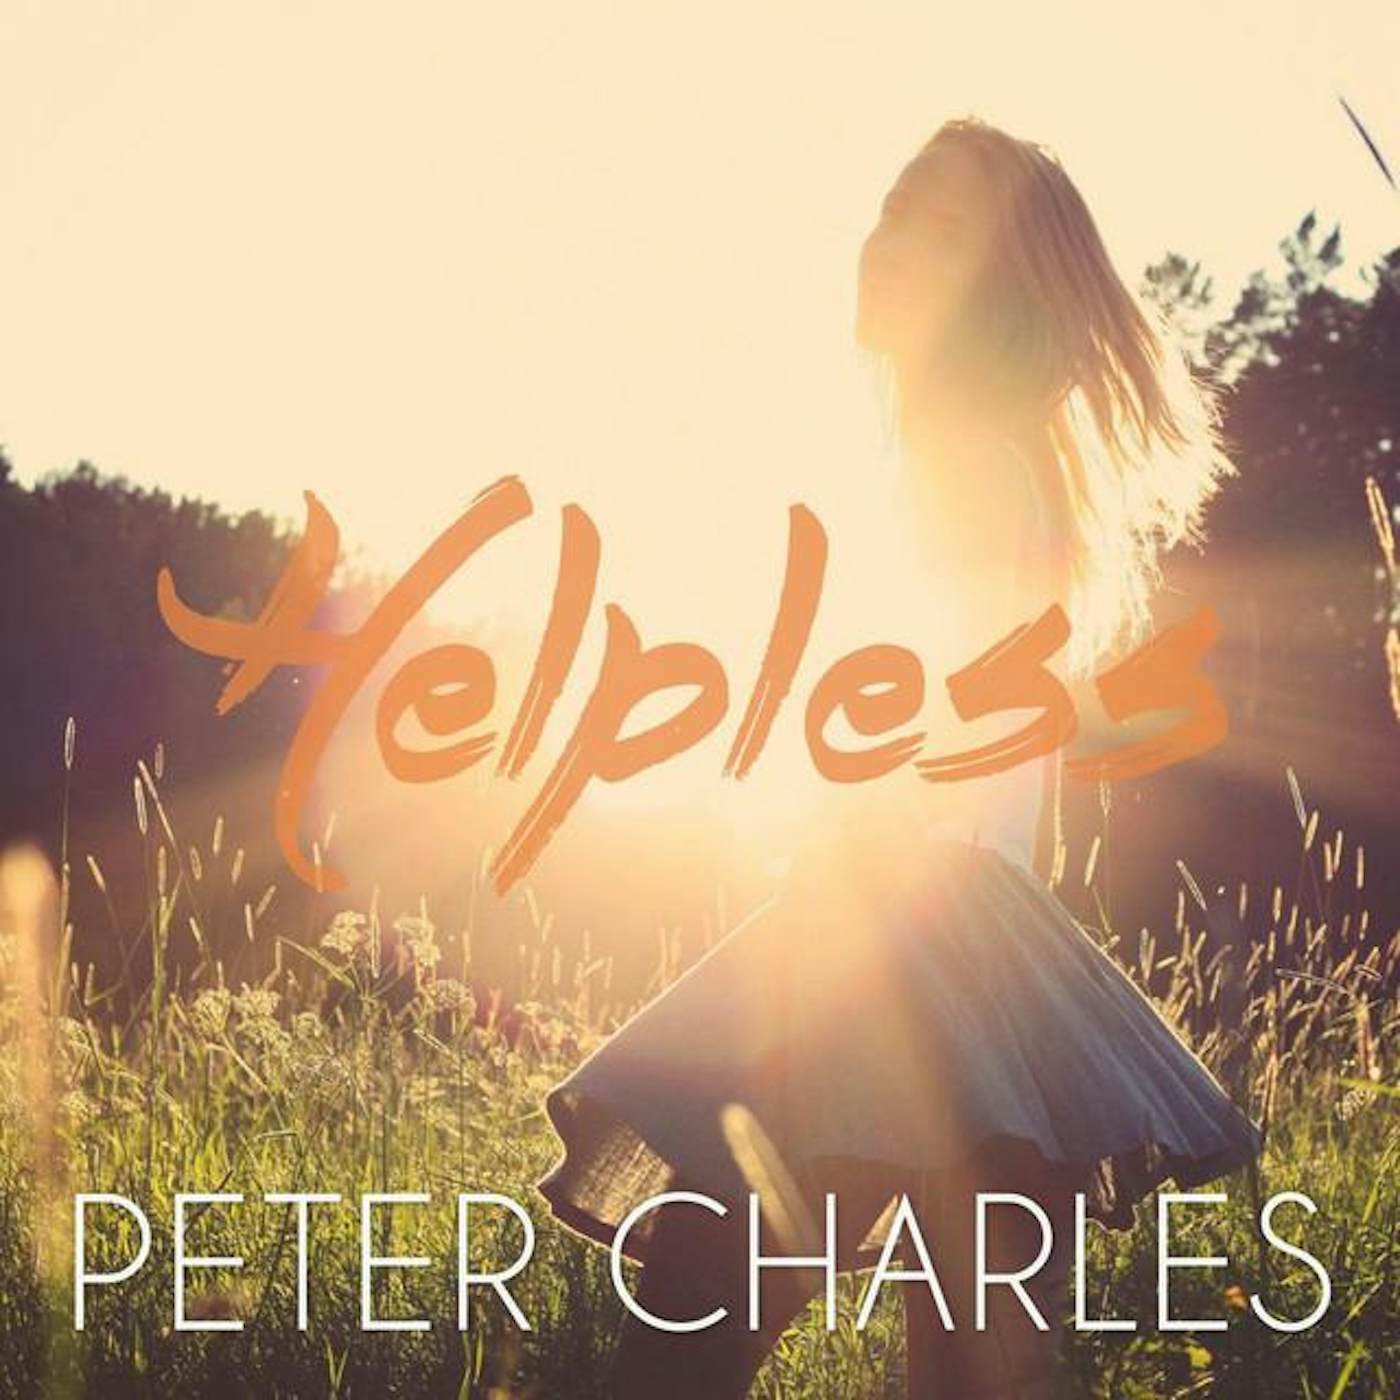 Peter Charles